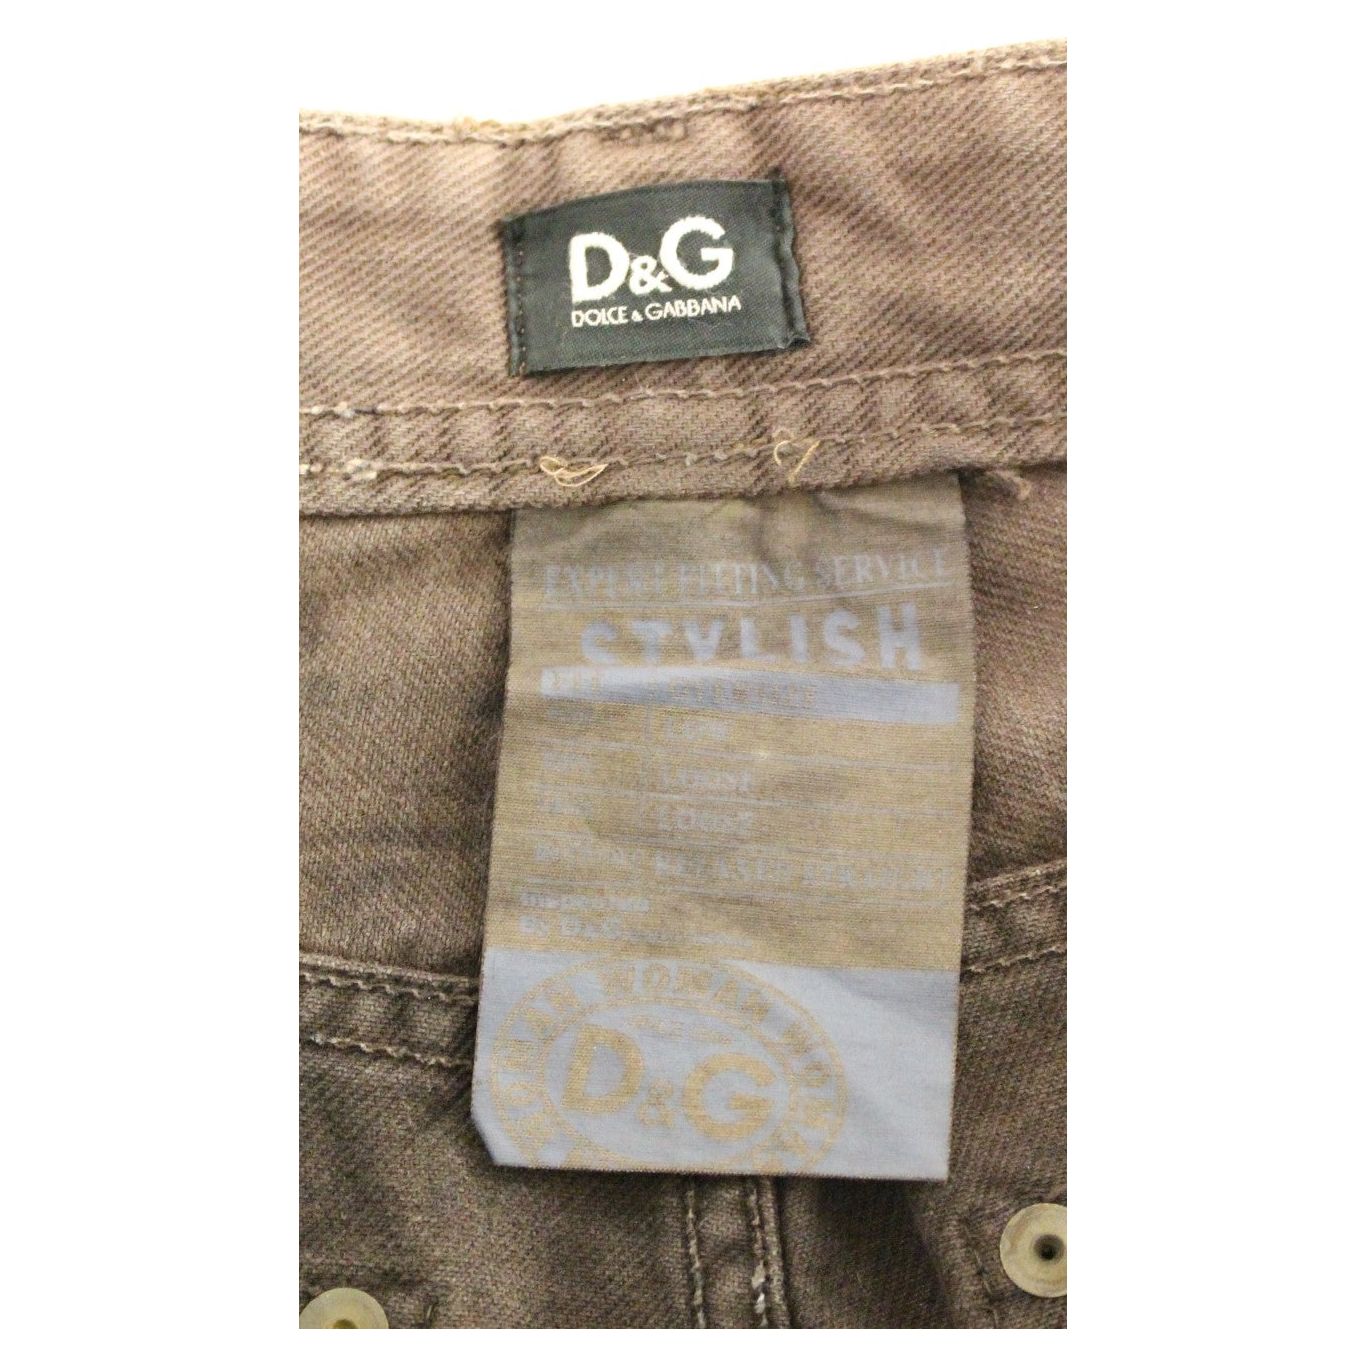 Dolce & Gabbana Elegant Brown Cotton Trousers brown-cotton-regular-fit-stylish-jeans